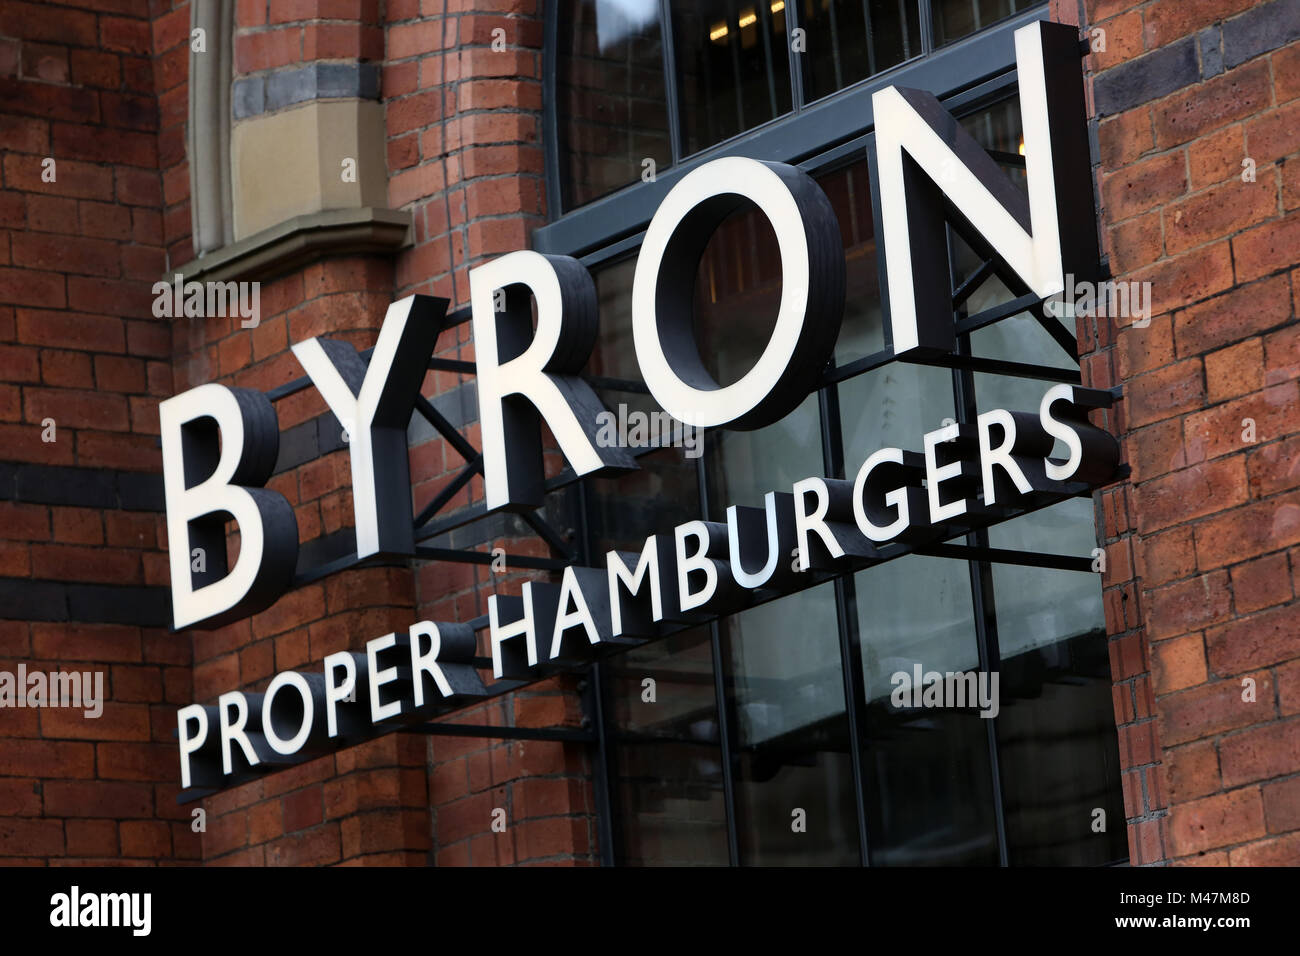 General views of Byron Proper Hamburgers restaurant in Leeds, West Yorkshire, UK. Stock Photo